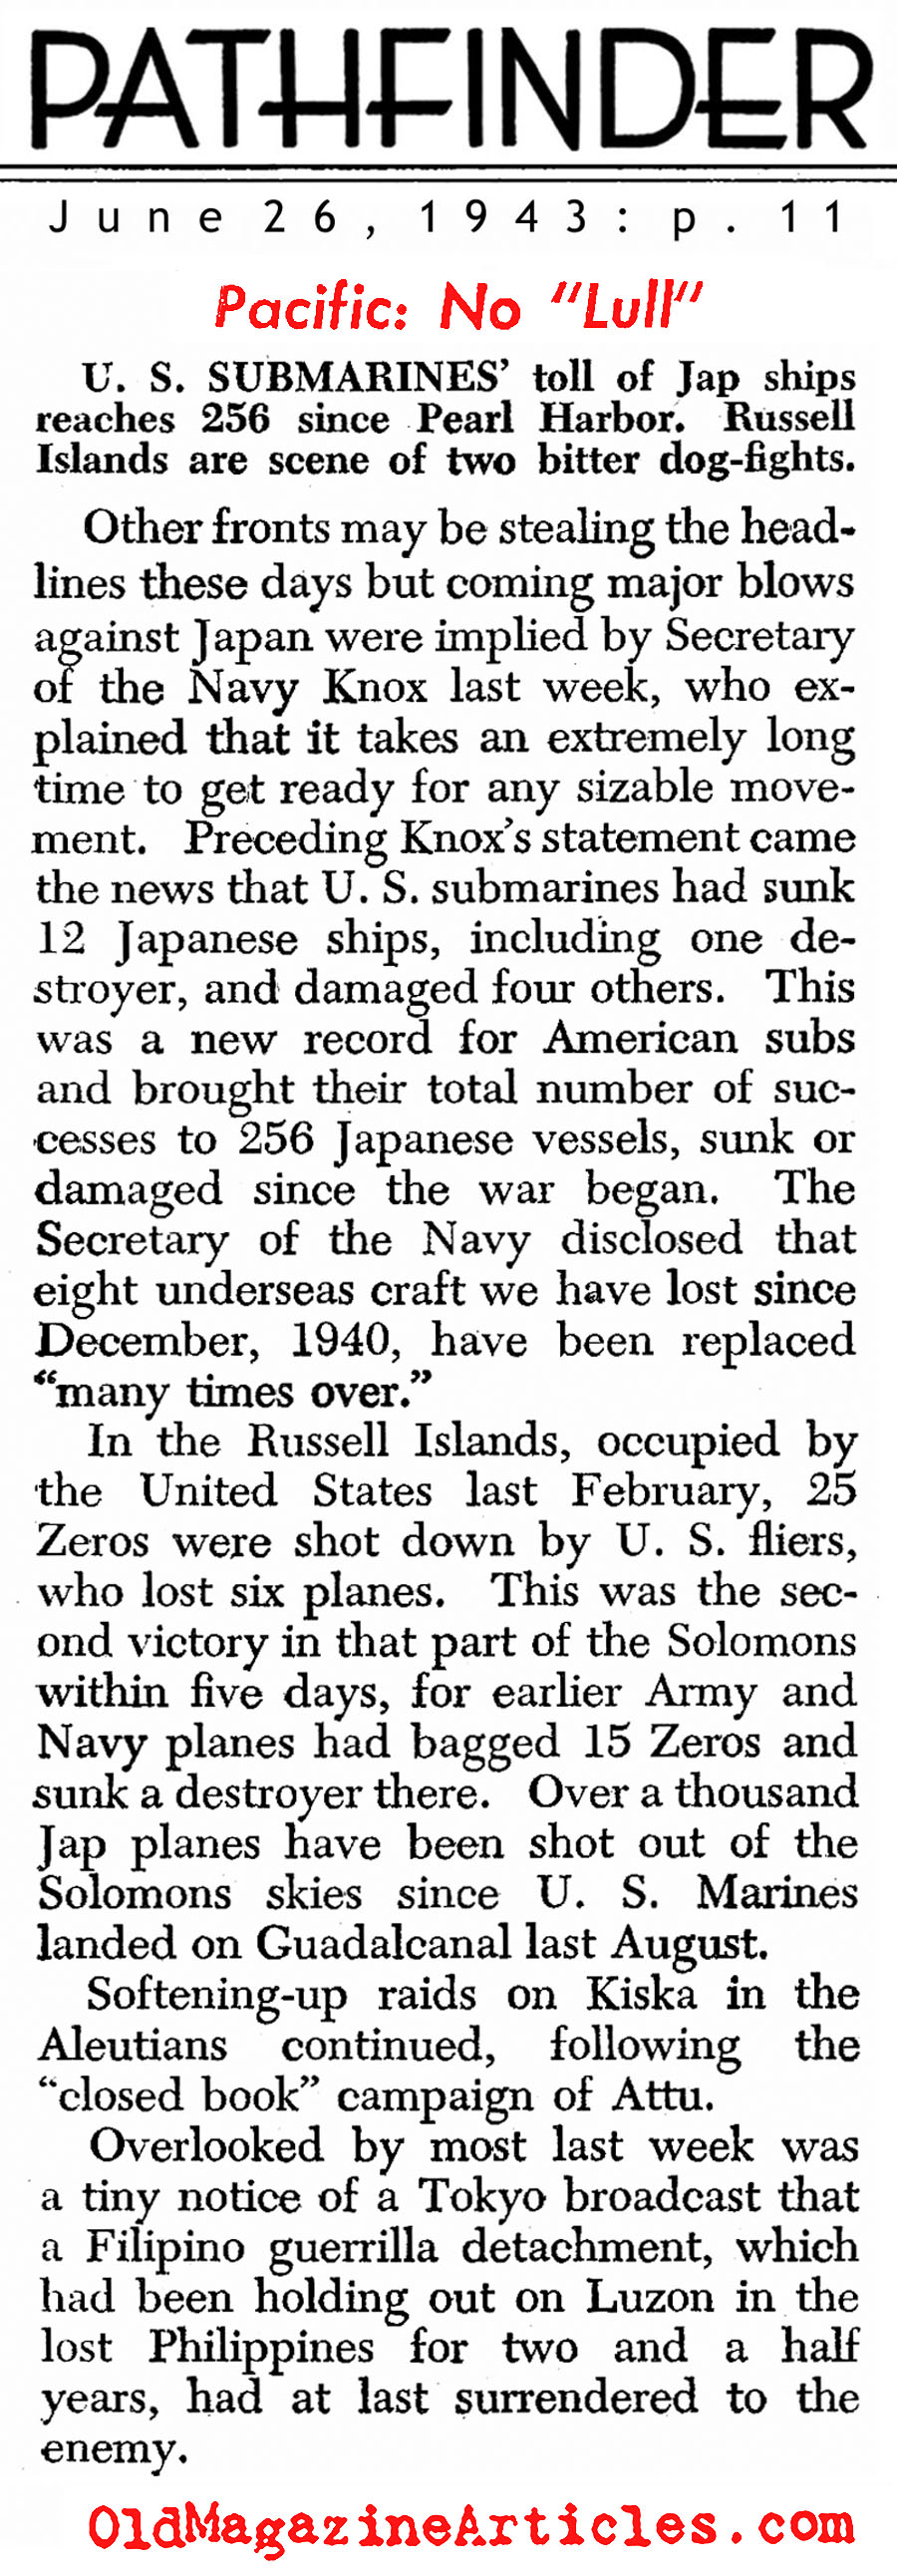 The Submarine War In The Pacific (Pathfinder Magazine, 1943)